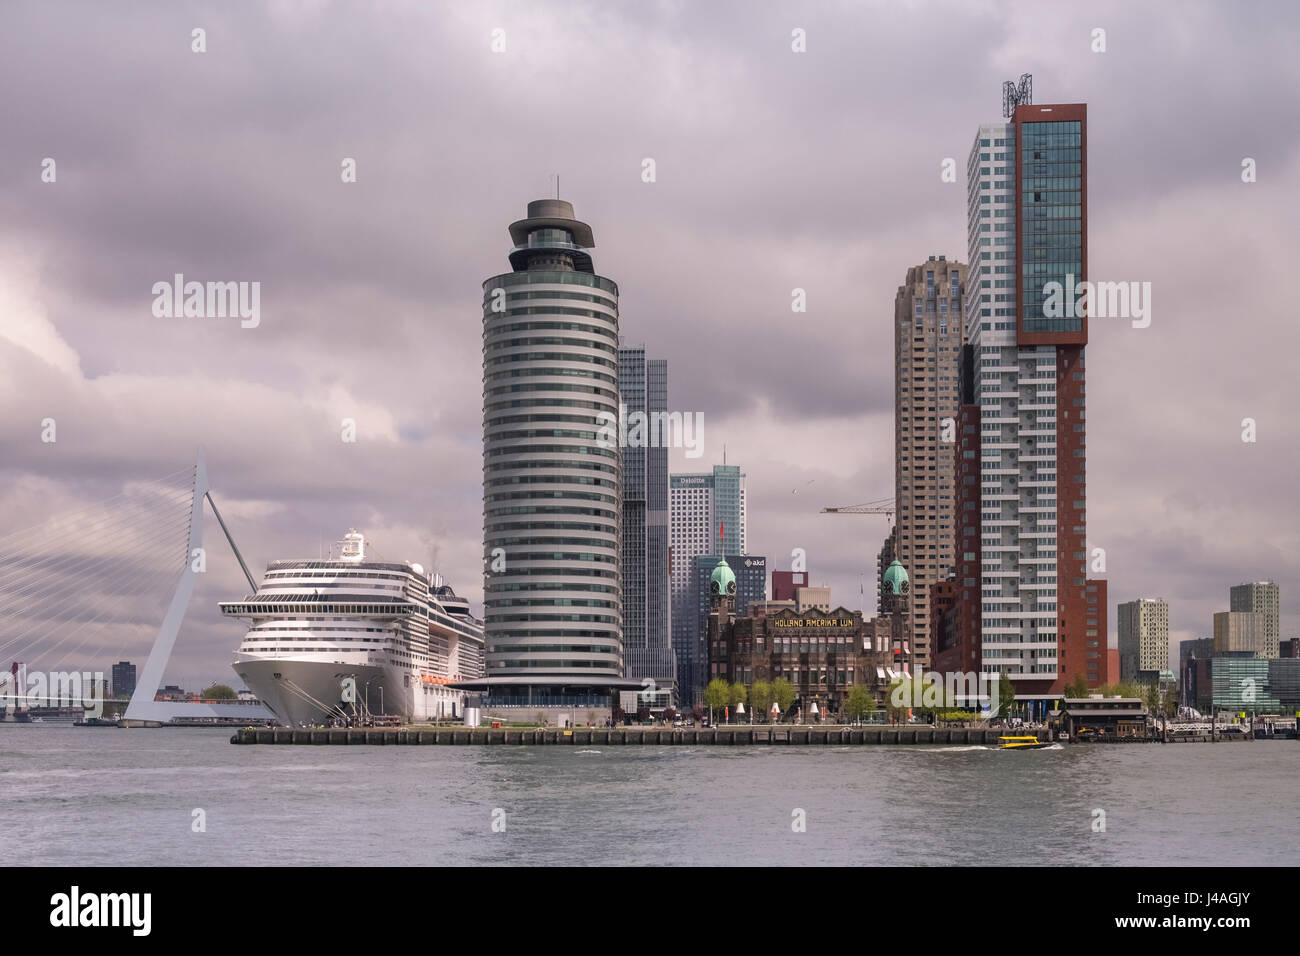 Modern large cruise ship at Wilhelmina Pier, with Erasmusbrug (Erasmus Bridge) in the background, Katendrecht, Rotterdam, The Netherlands. Stock Photo